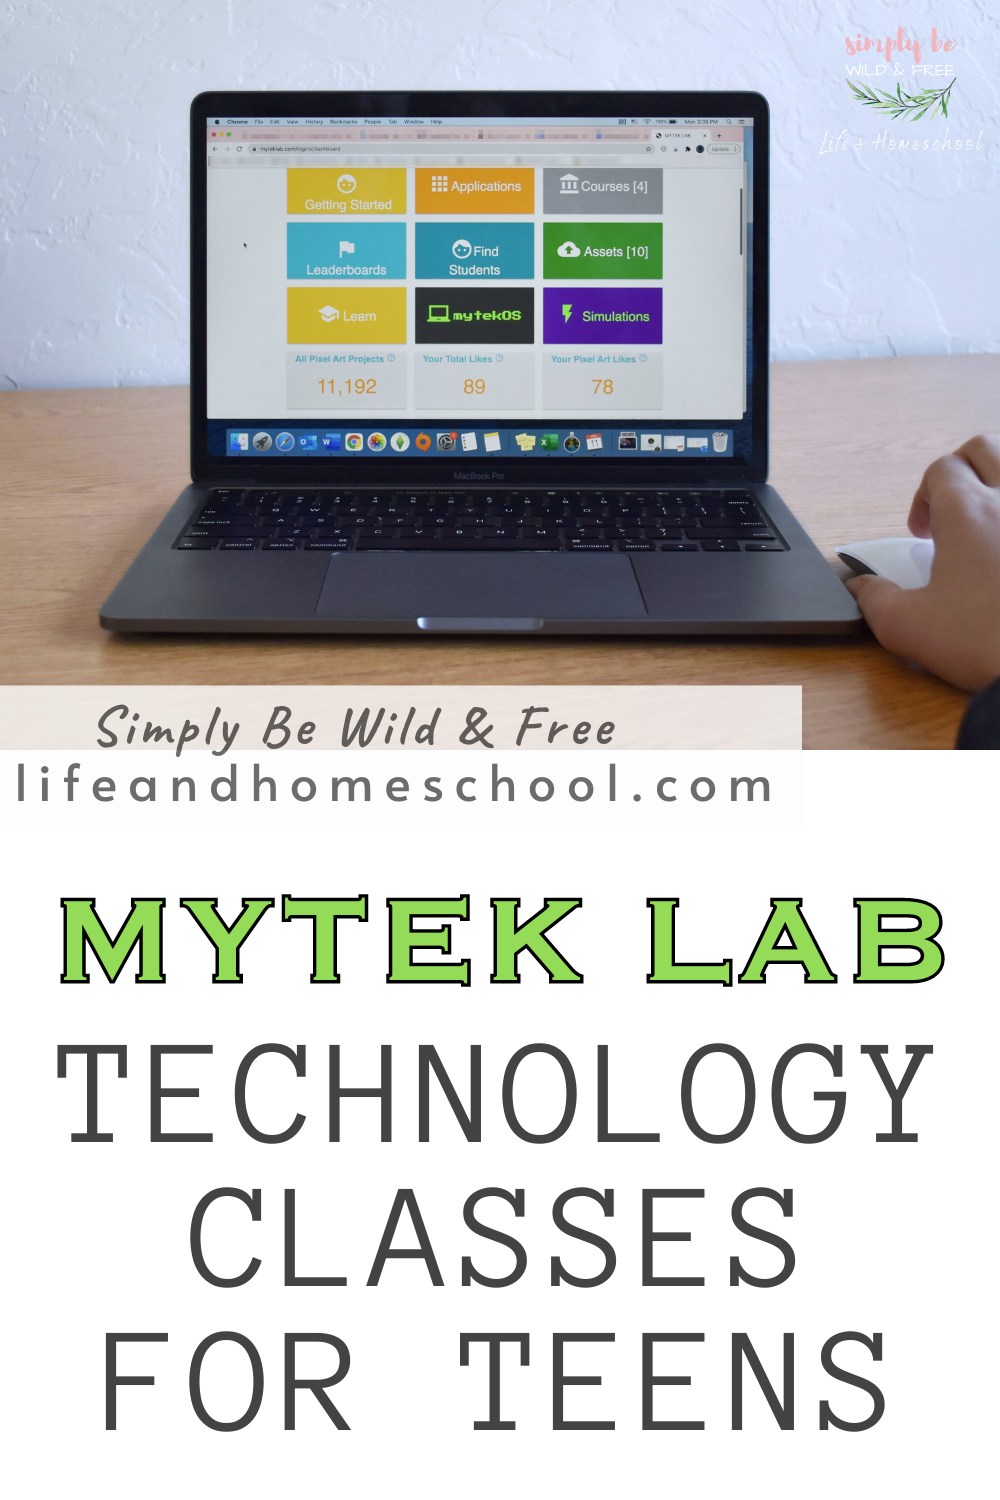 MYTEK LAB Technology Classes